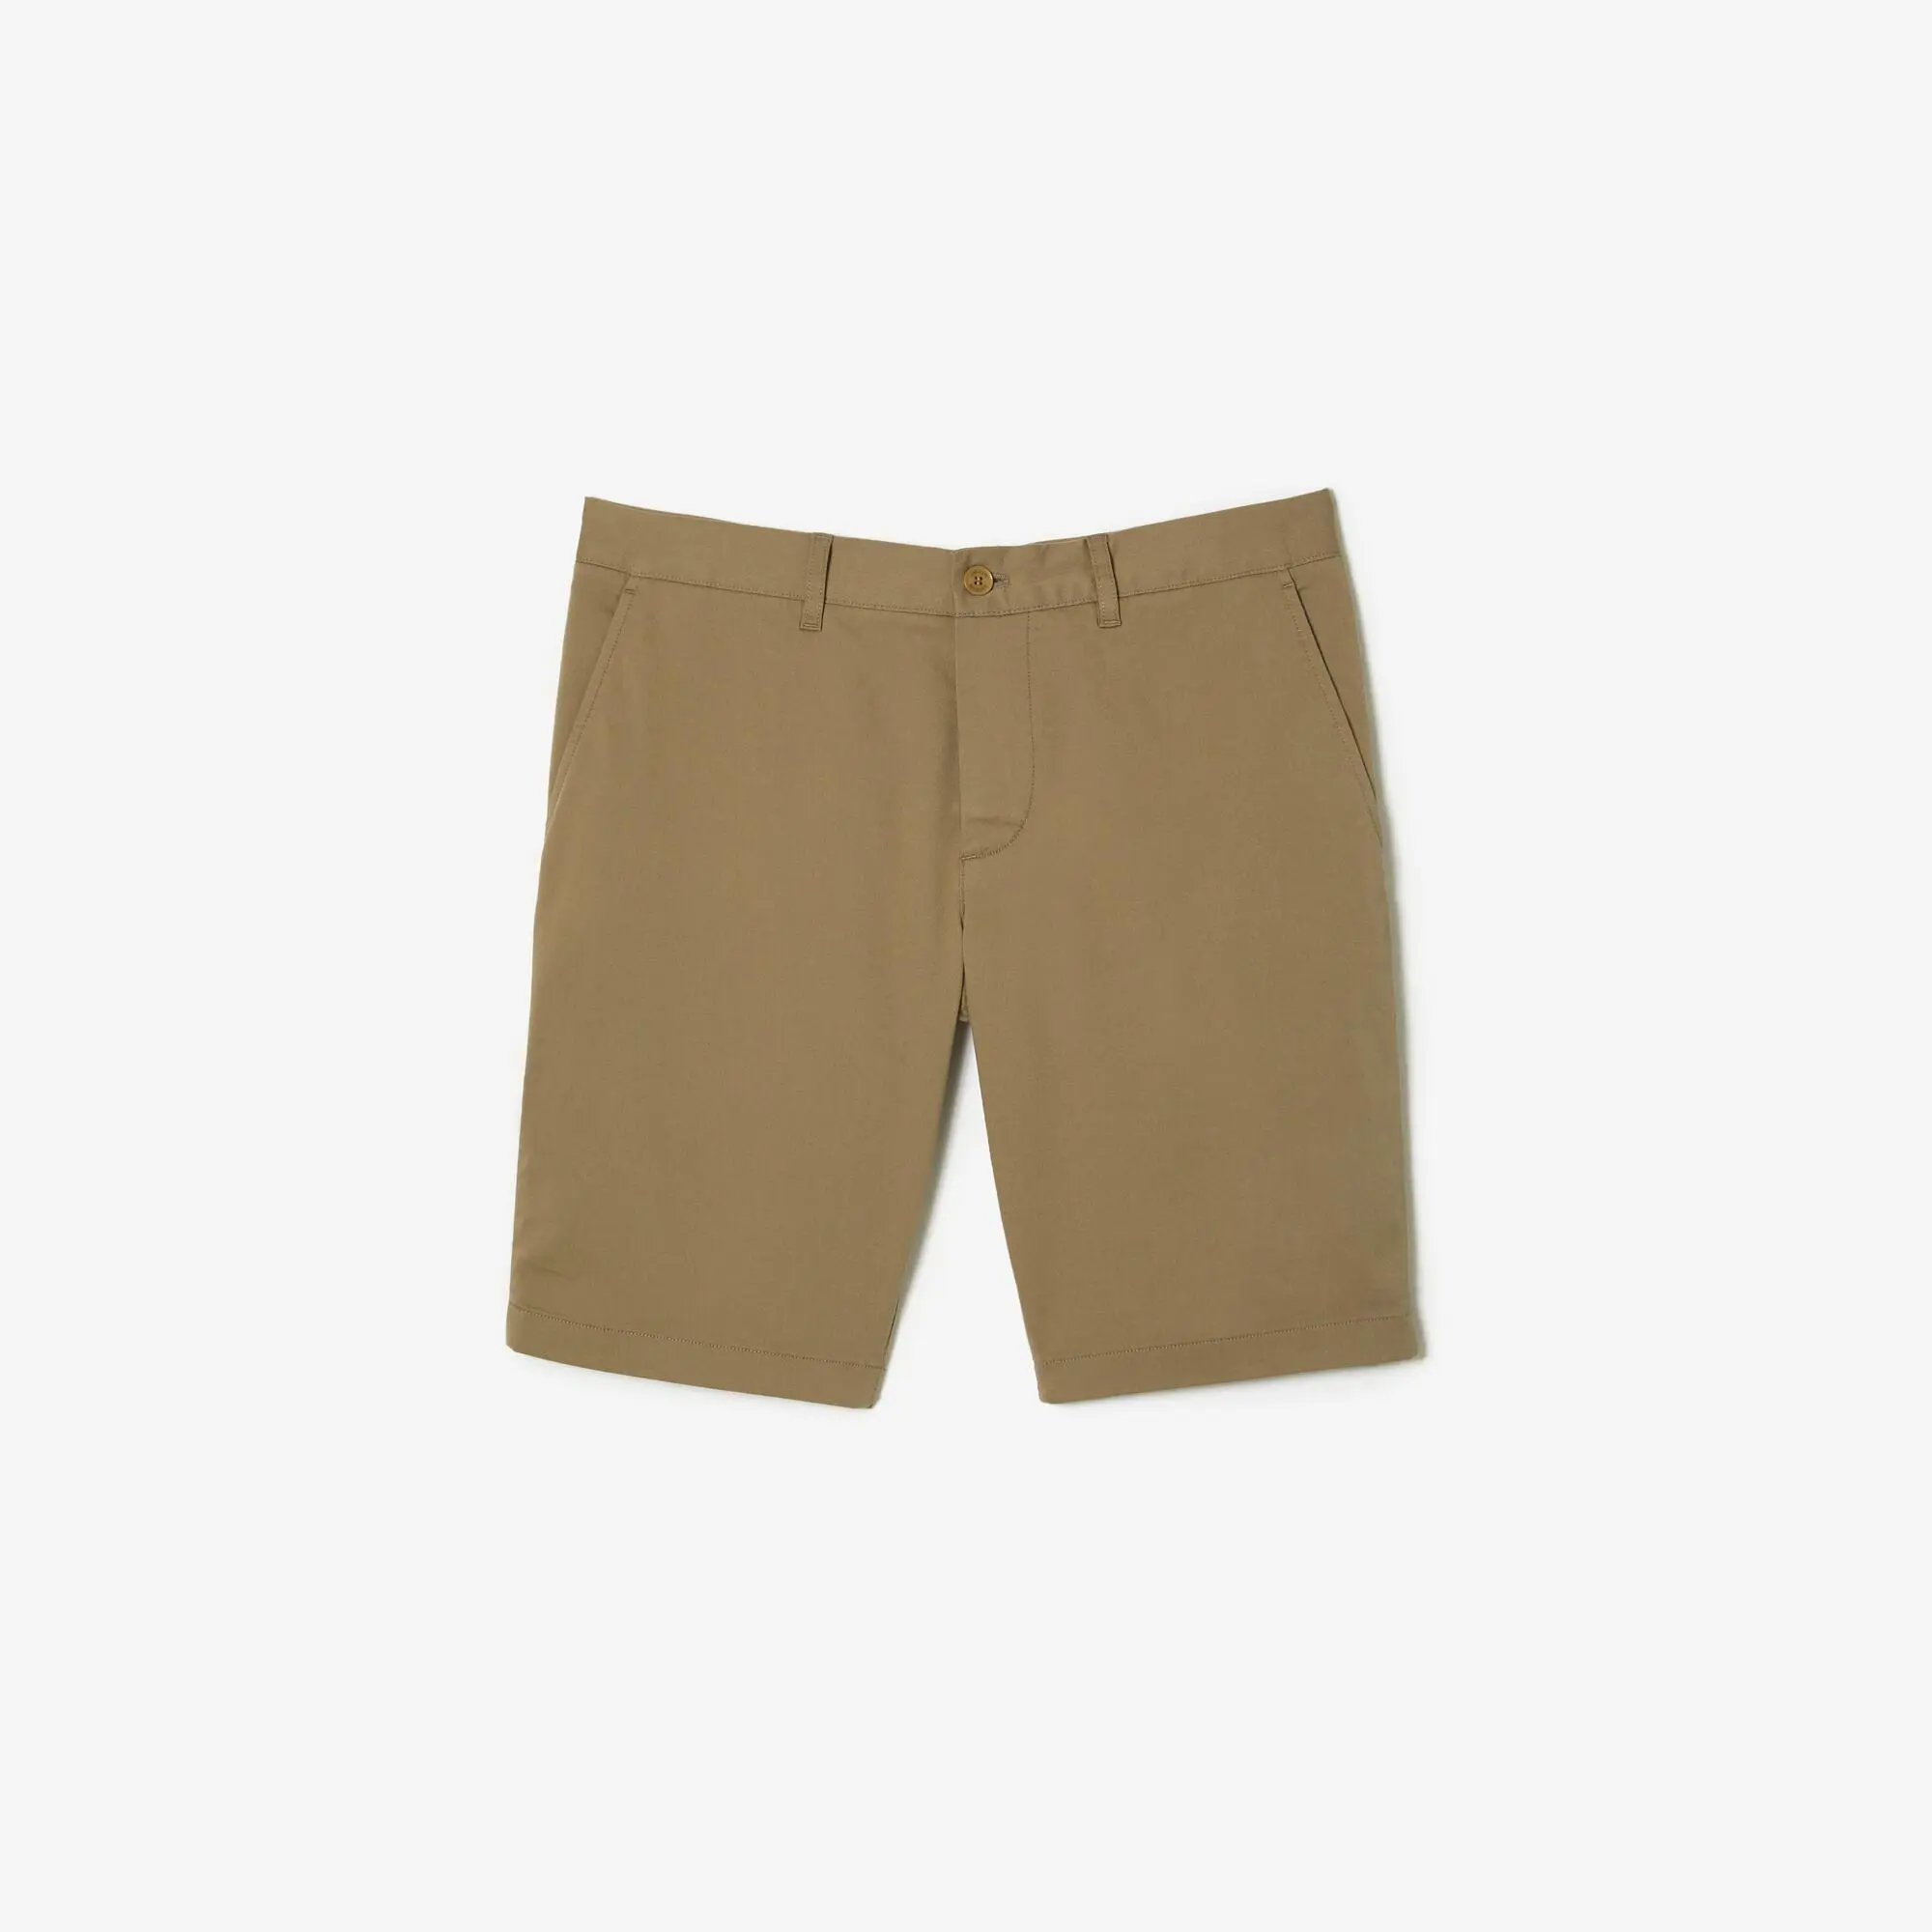 Lacoste Men's Slim Fit Stretch Cotton Bermuda Shorts. 2